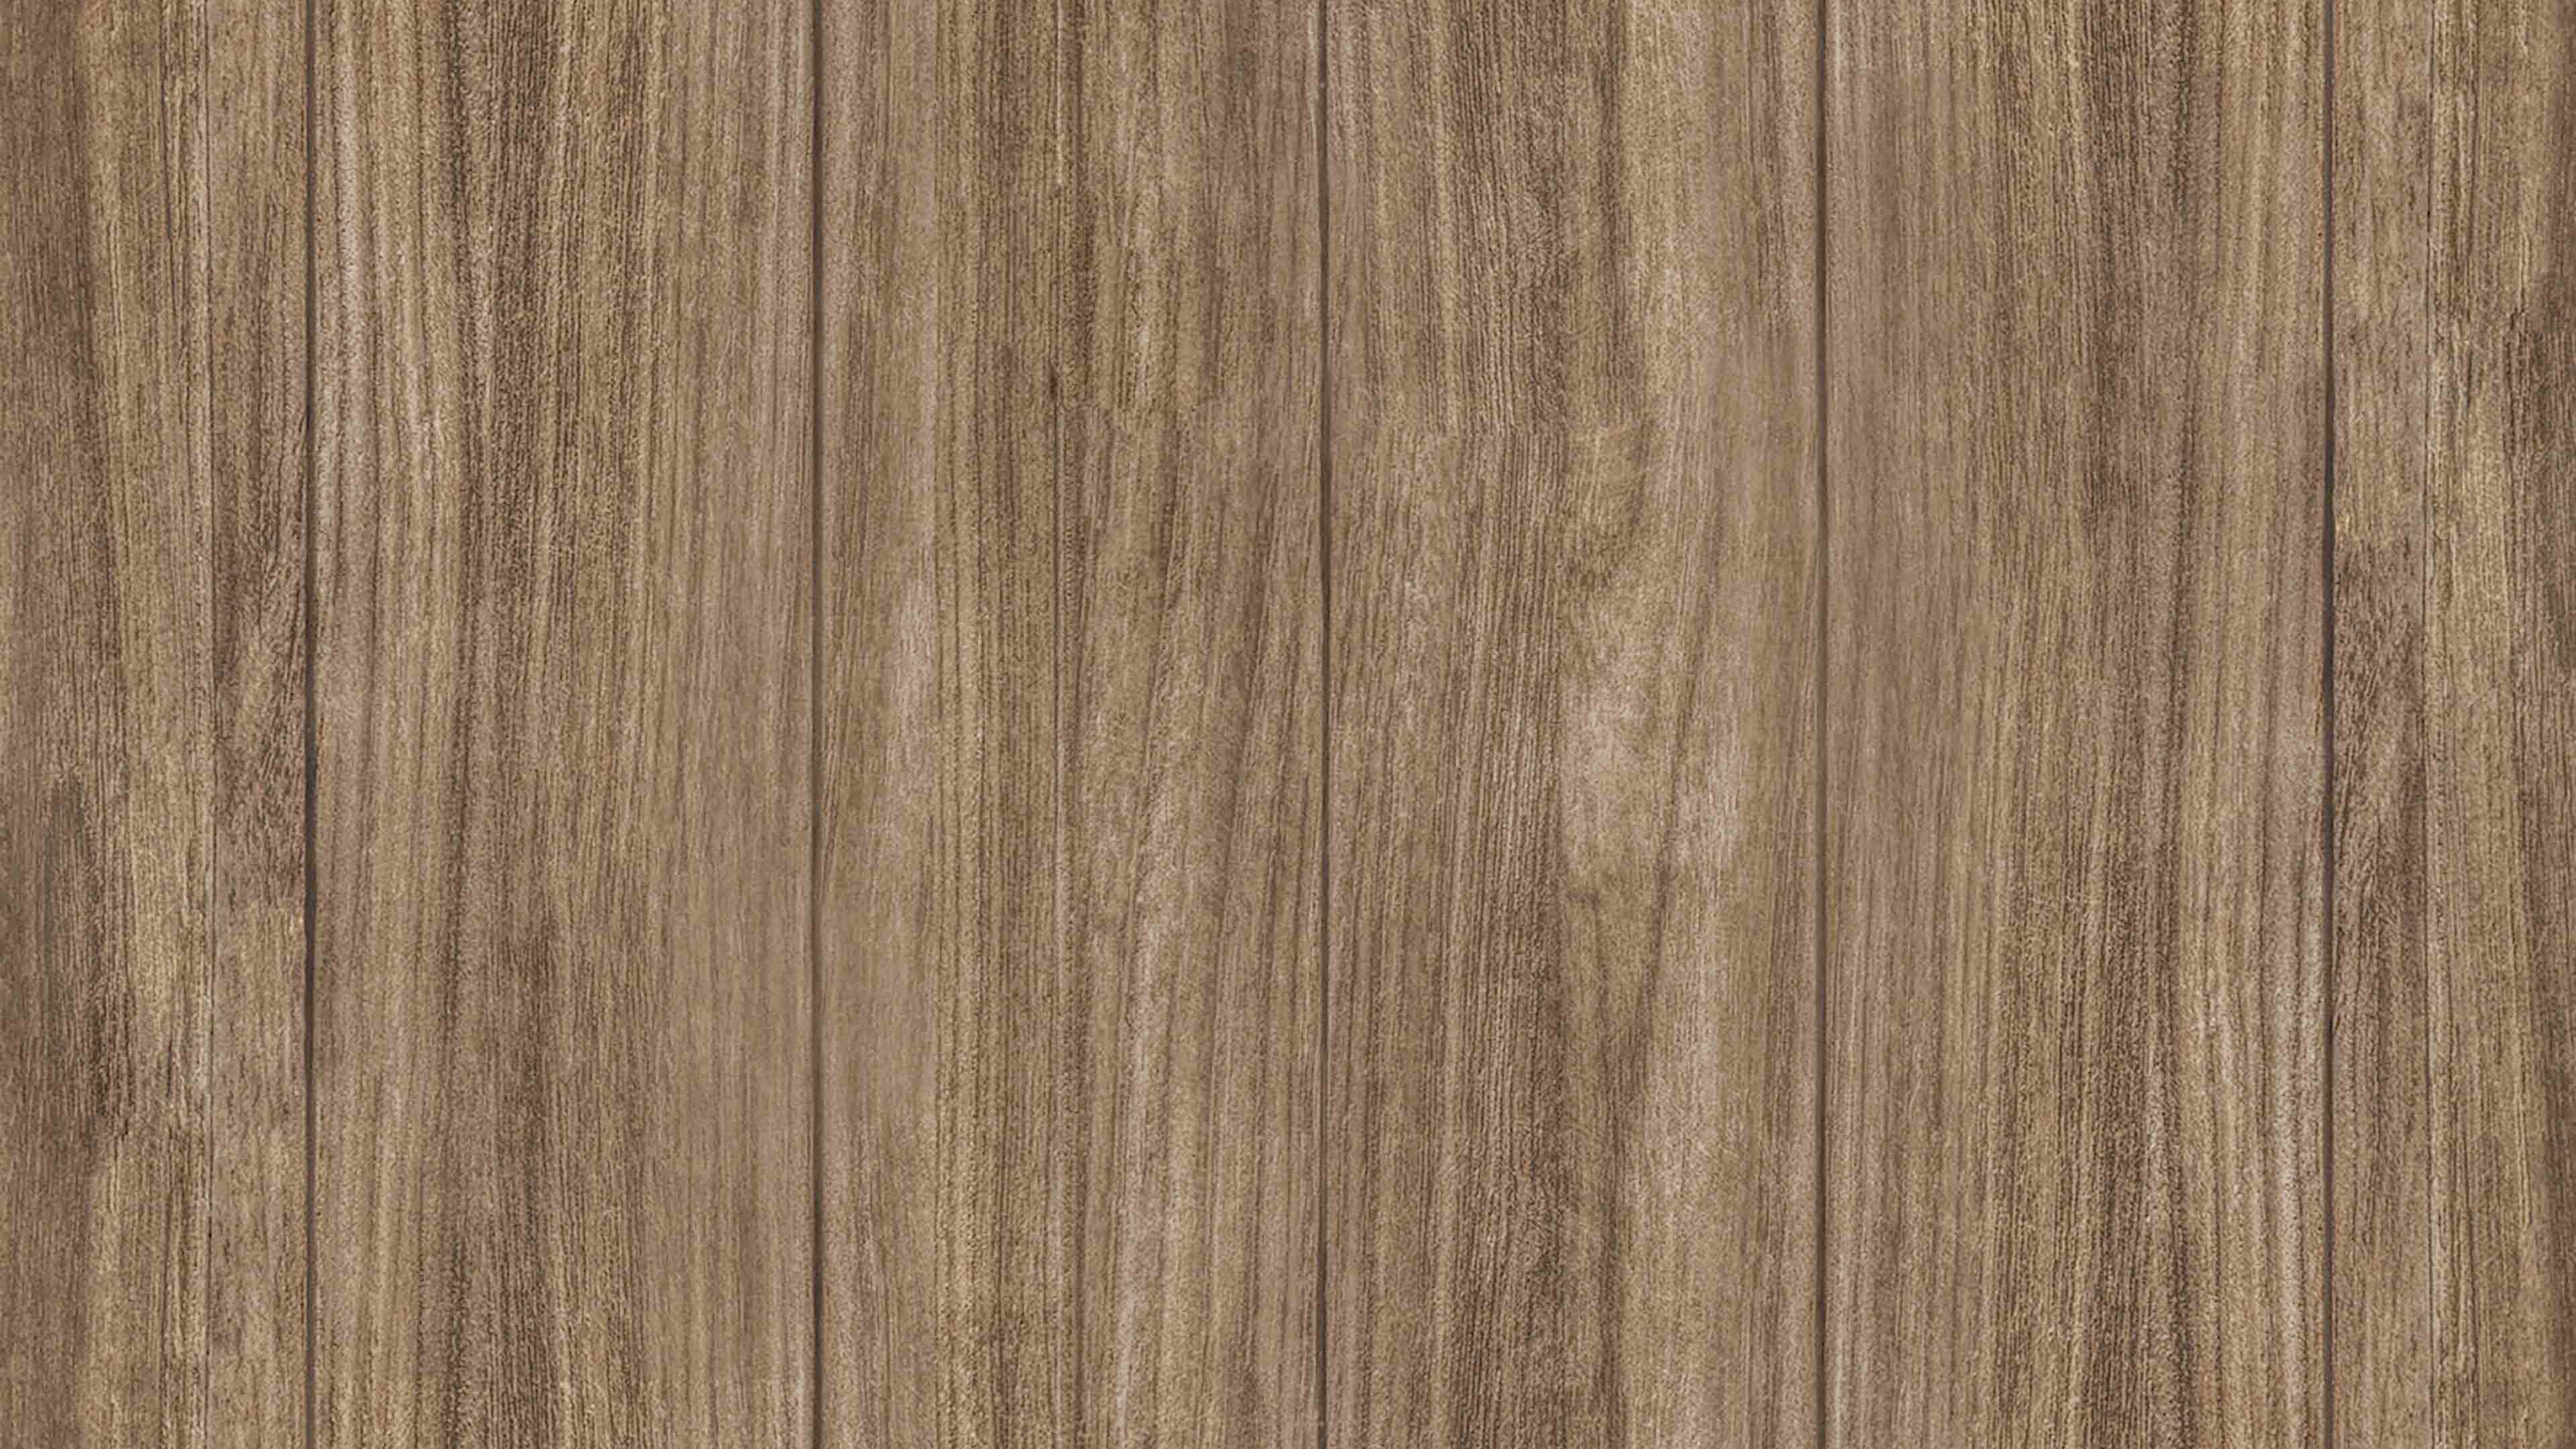 Wallpaper That Looks Like Wood Planks HD Wallpaper